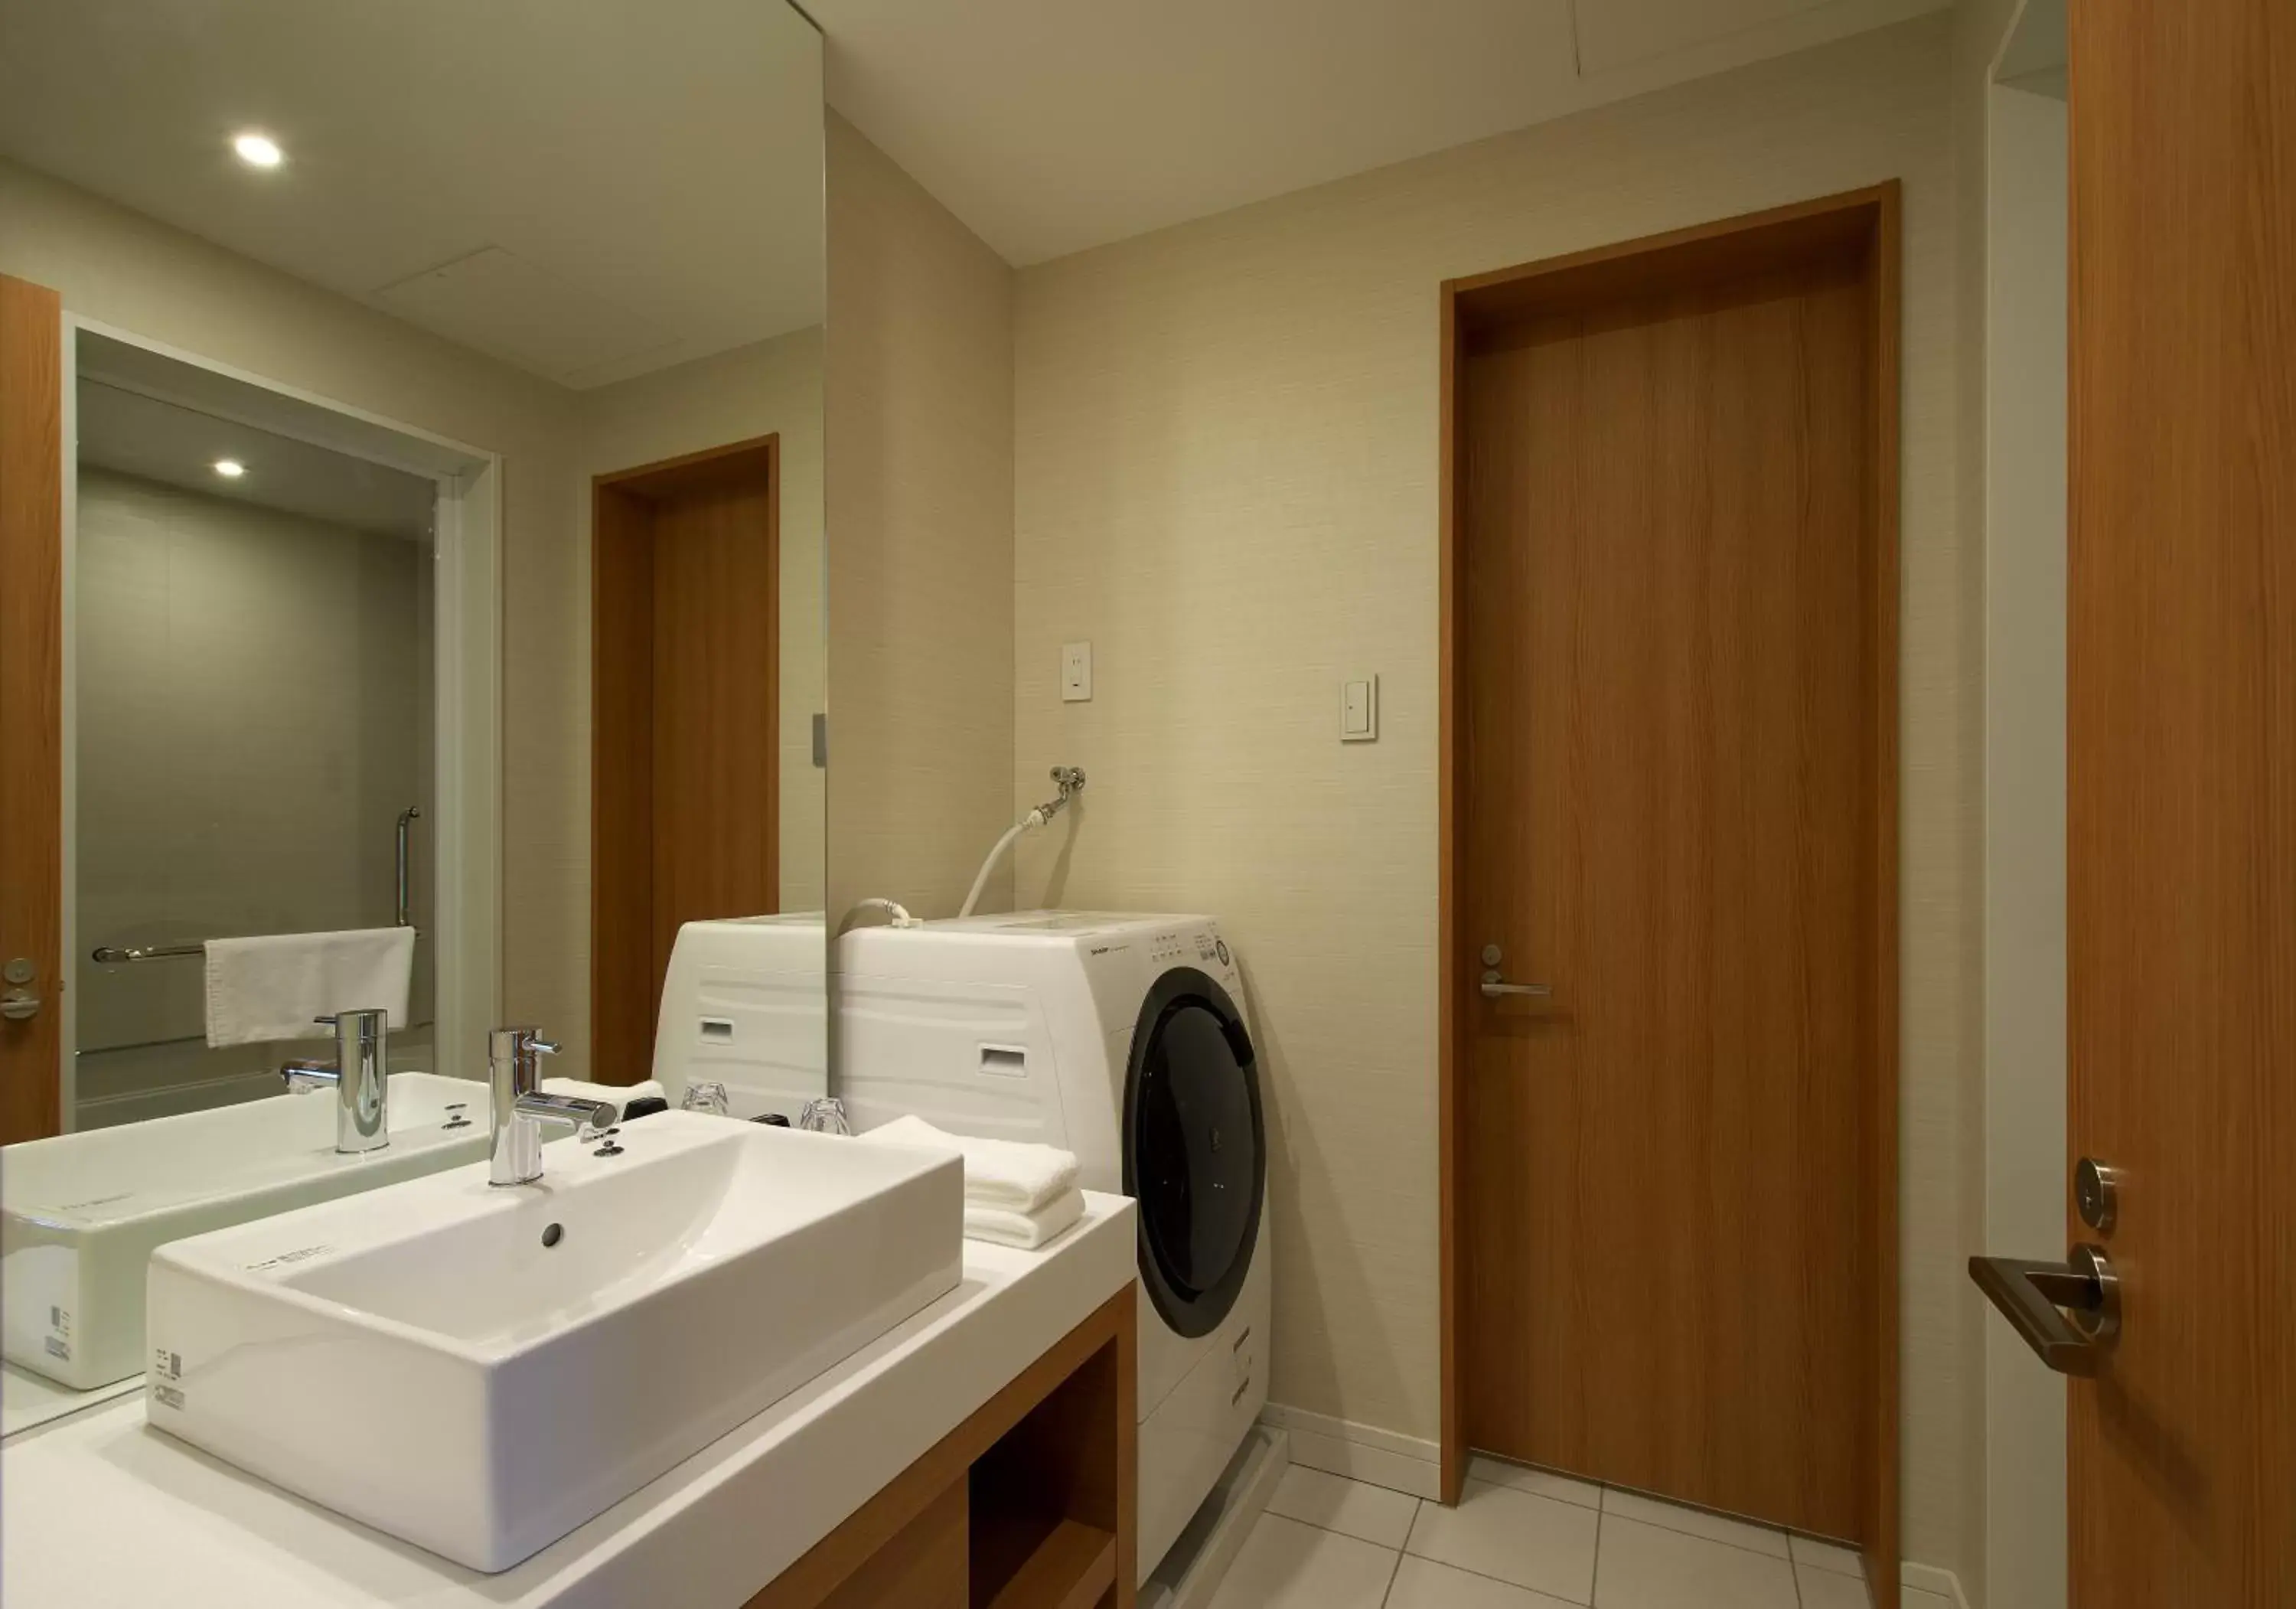 Area and facilities, Bathroom in Nagoya JR Gate Tower Hotel